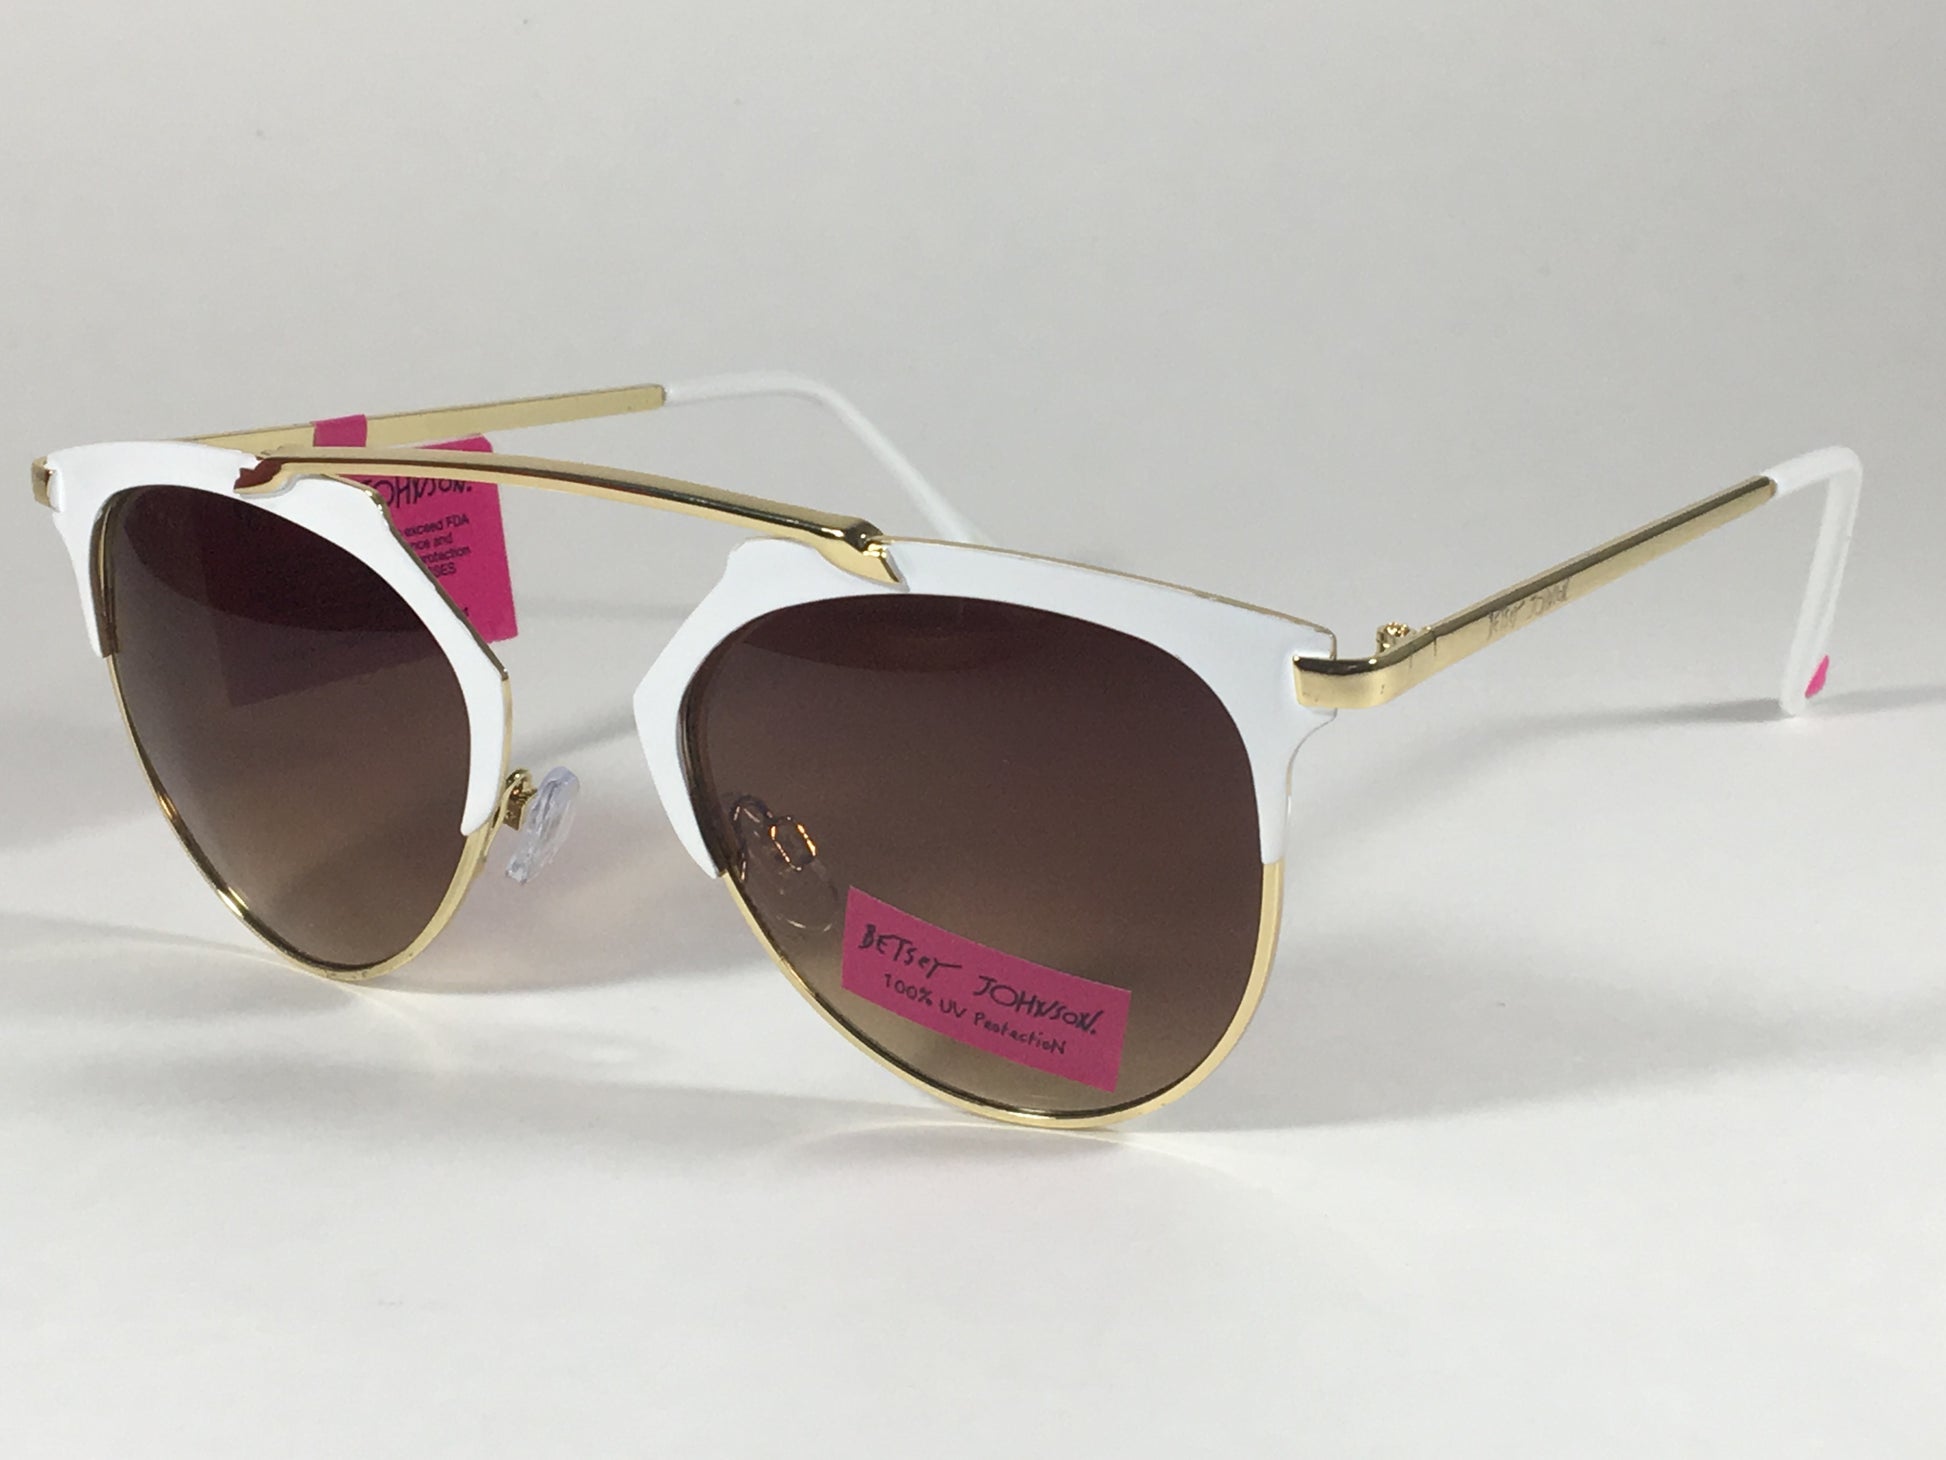 Betsey Johnson Womens Brow Sunglasses Gold White Brown Gradient Retro Bj475114 - Sunglasses